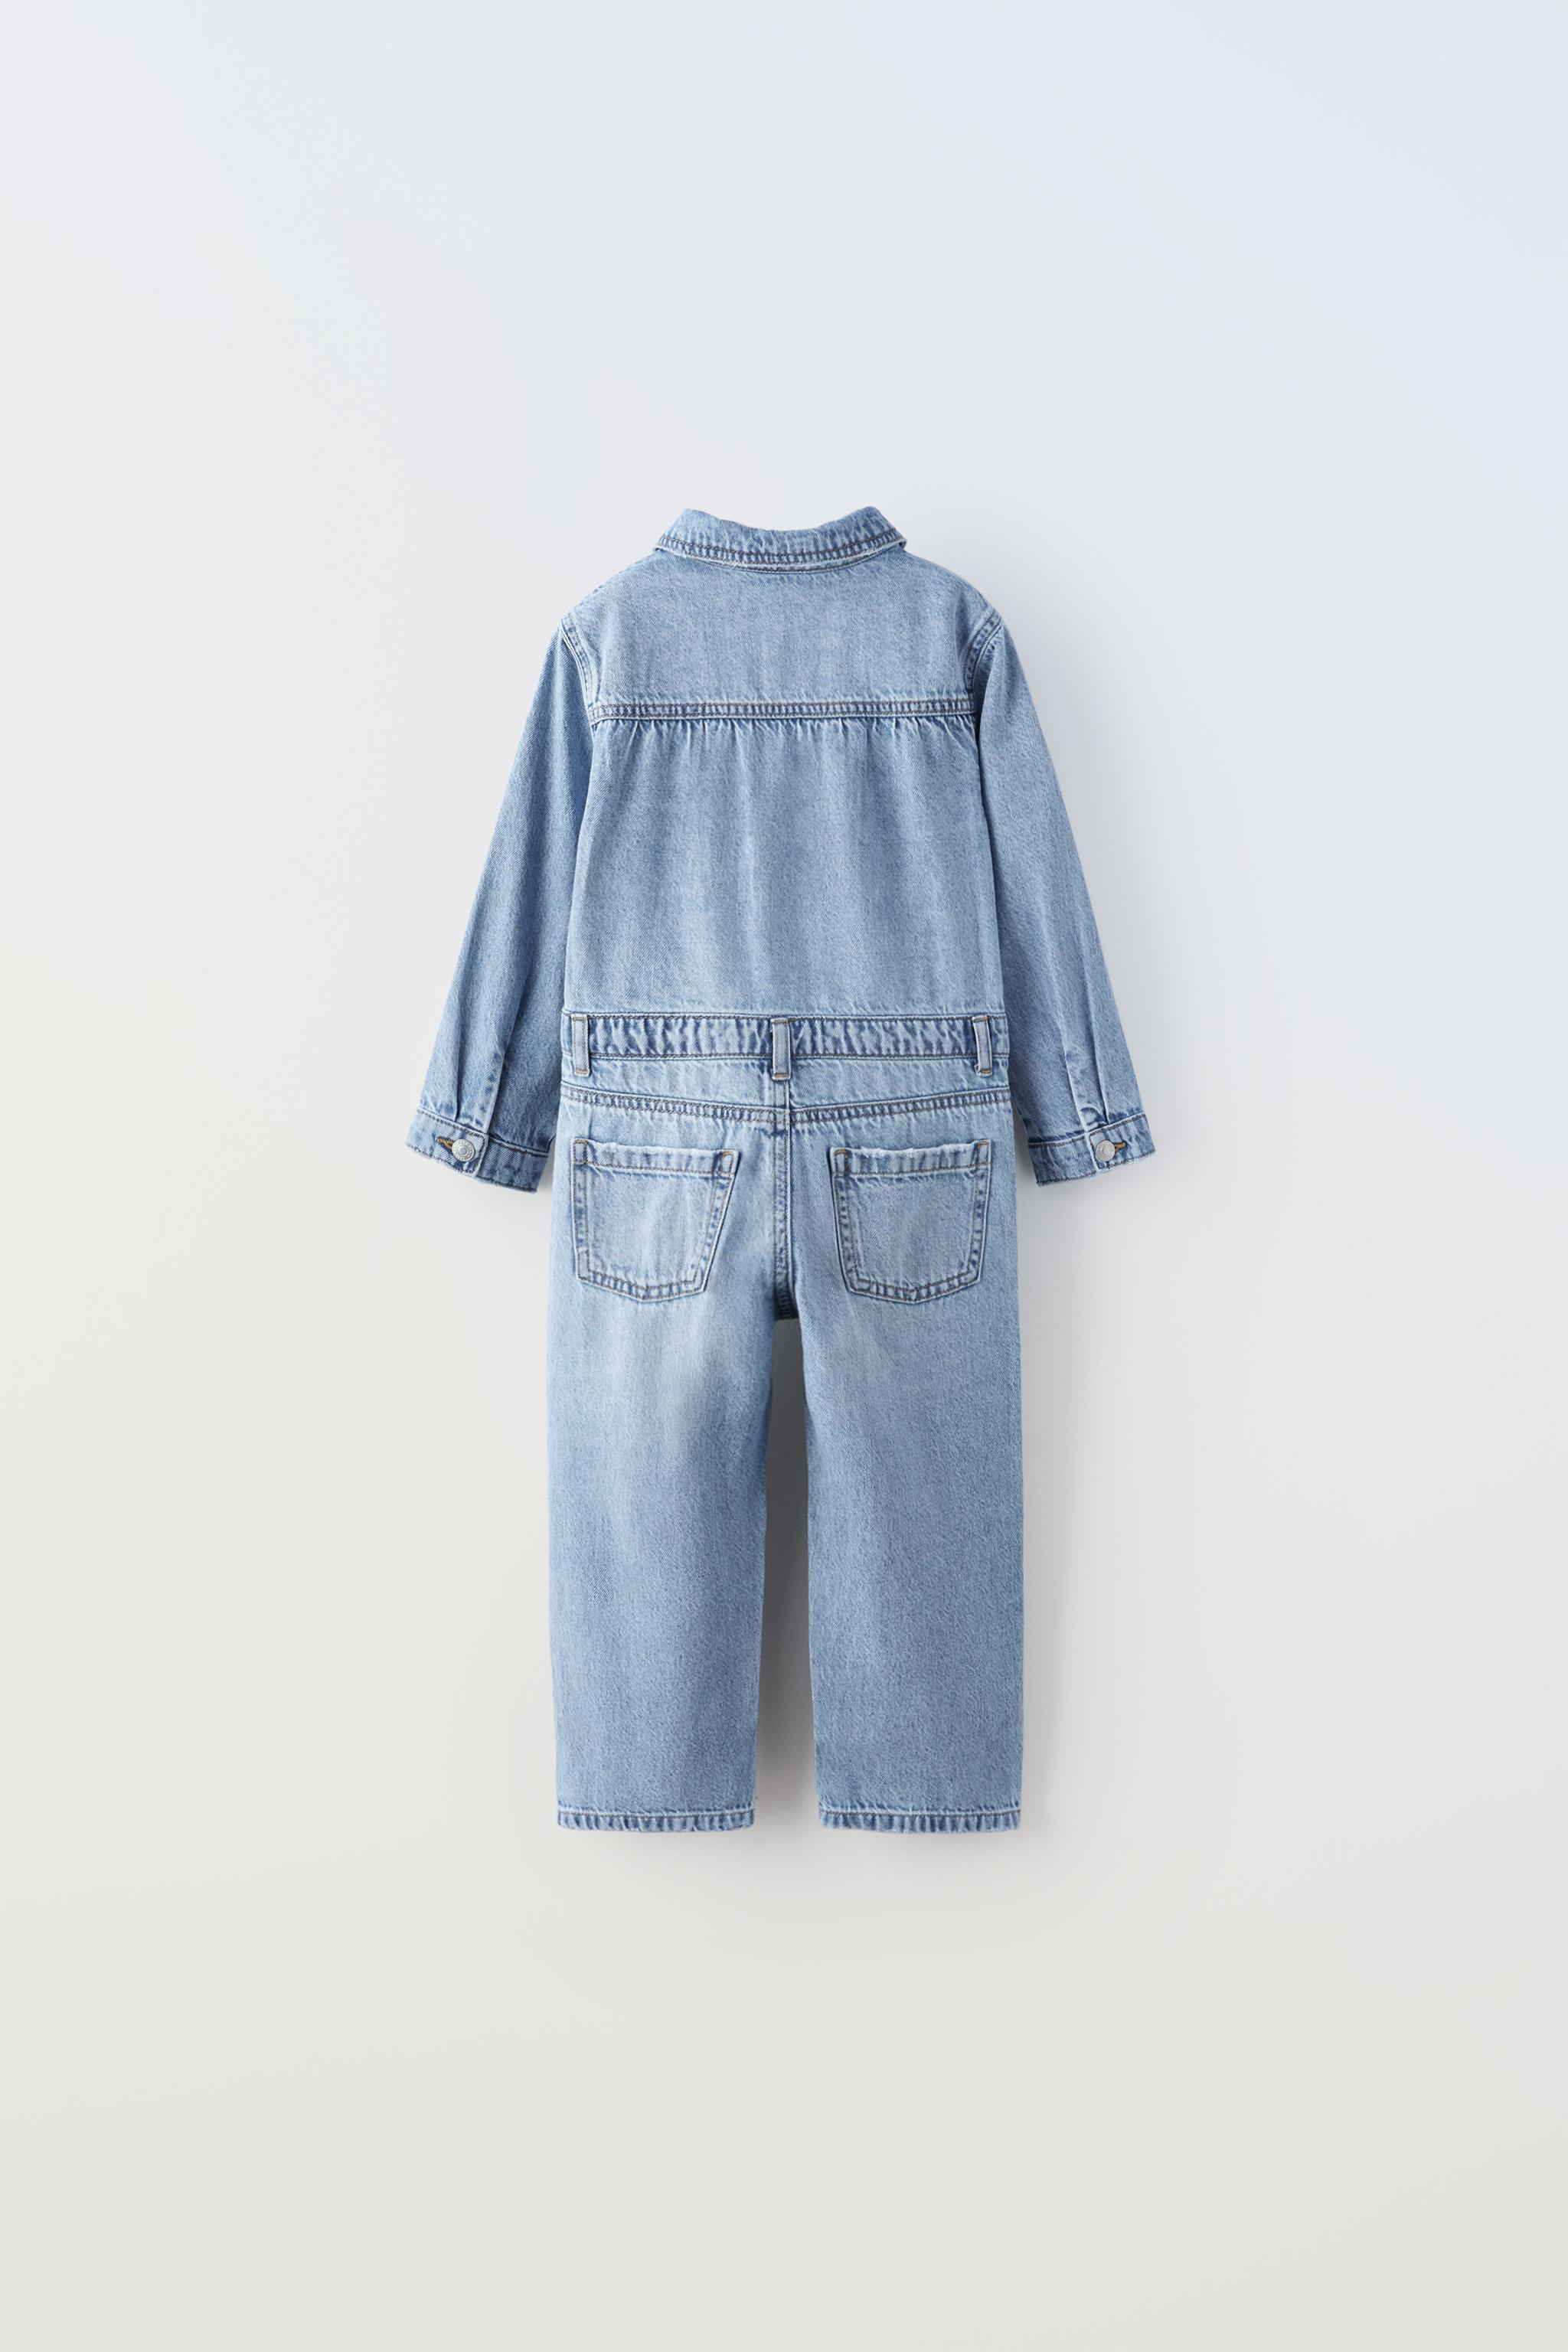 Zara Kids Girl Belted Snap Button Denim Jumpsuit Blue 4676/607 Size 11-12